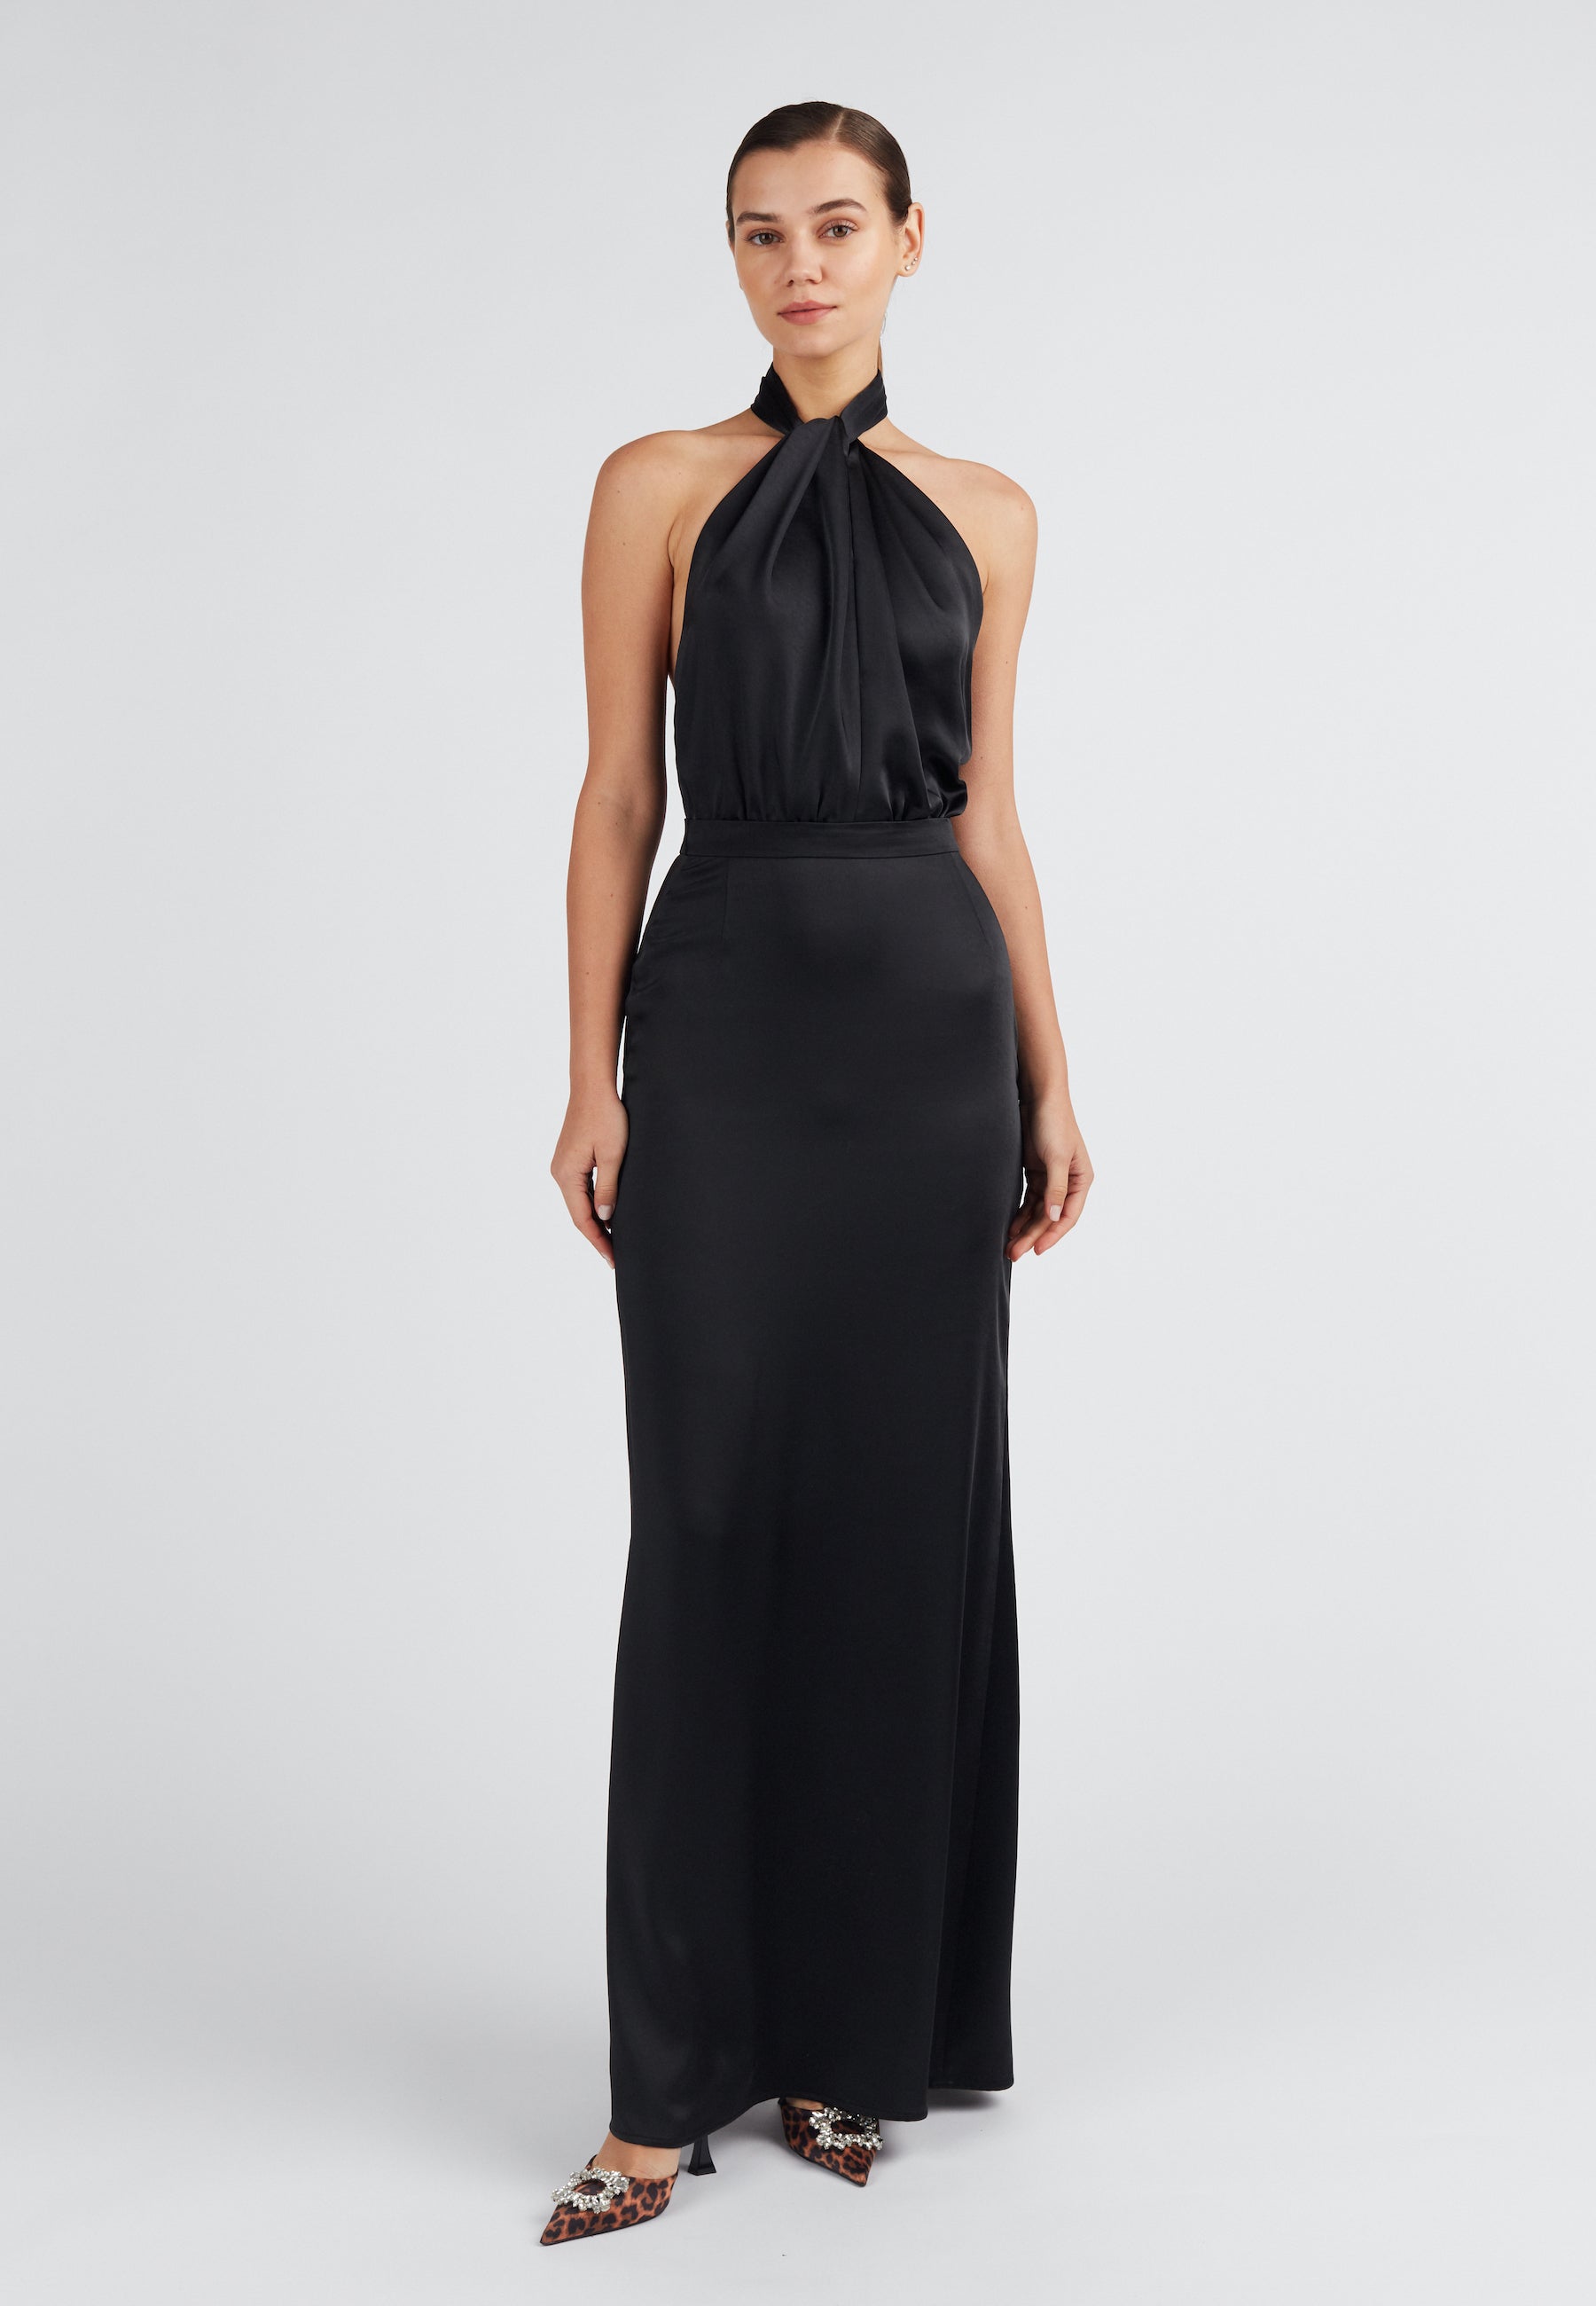 Black formal long dress